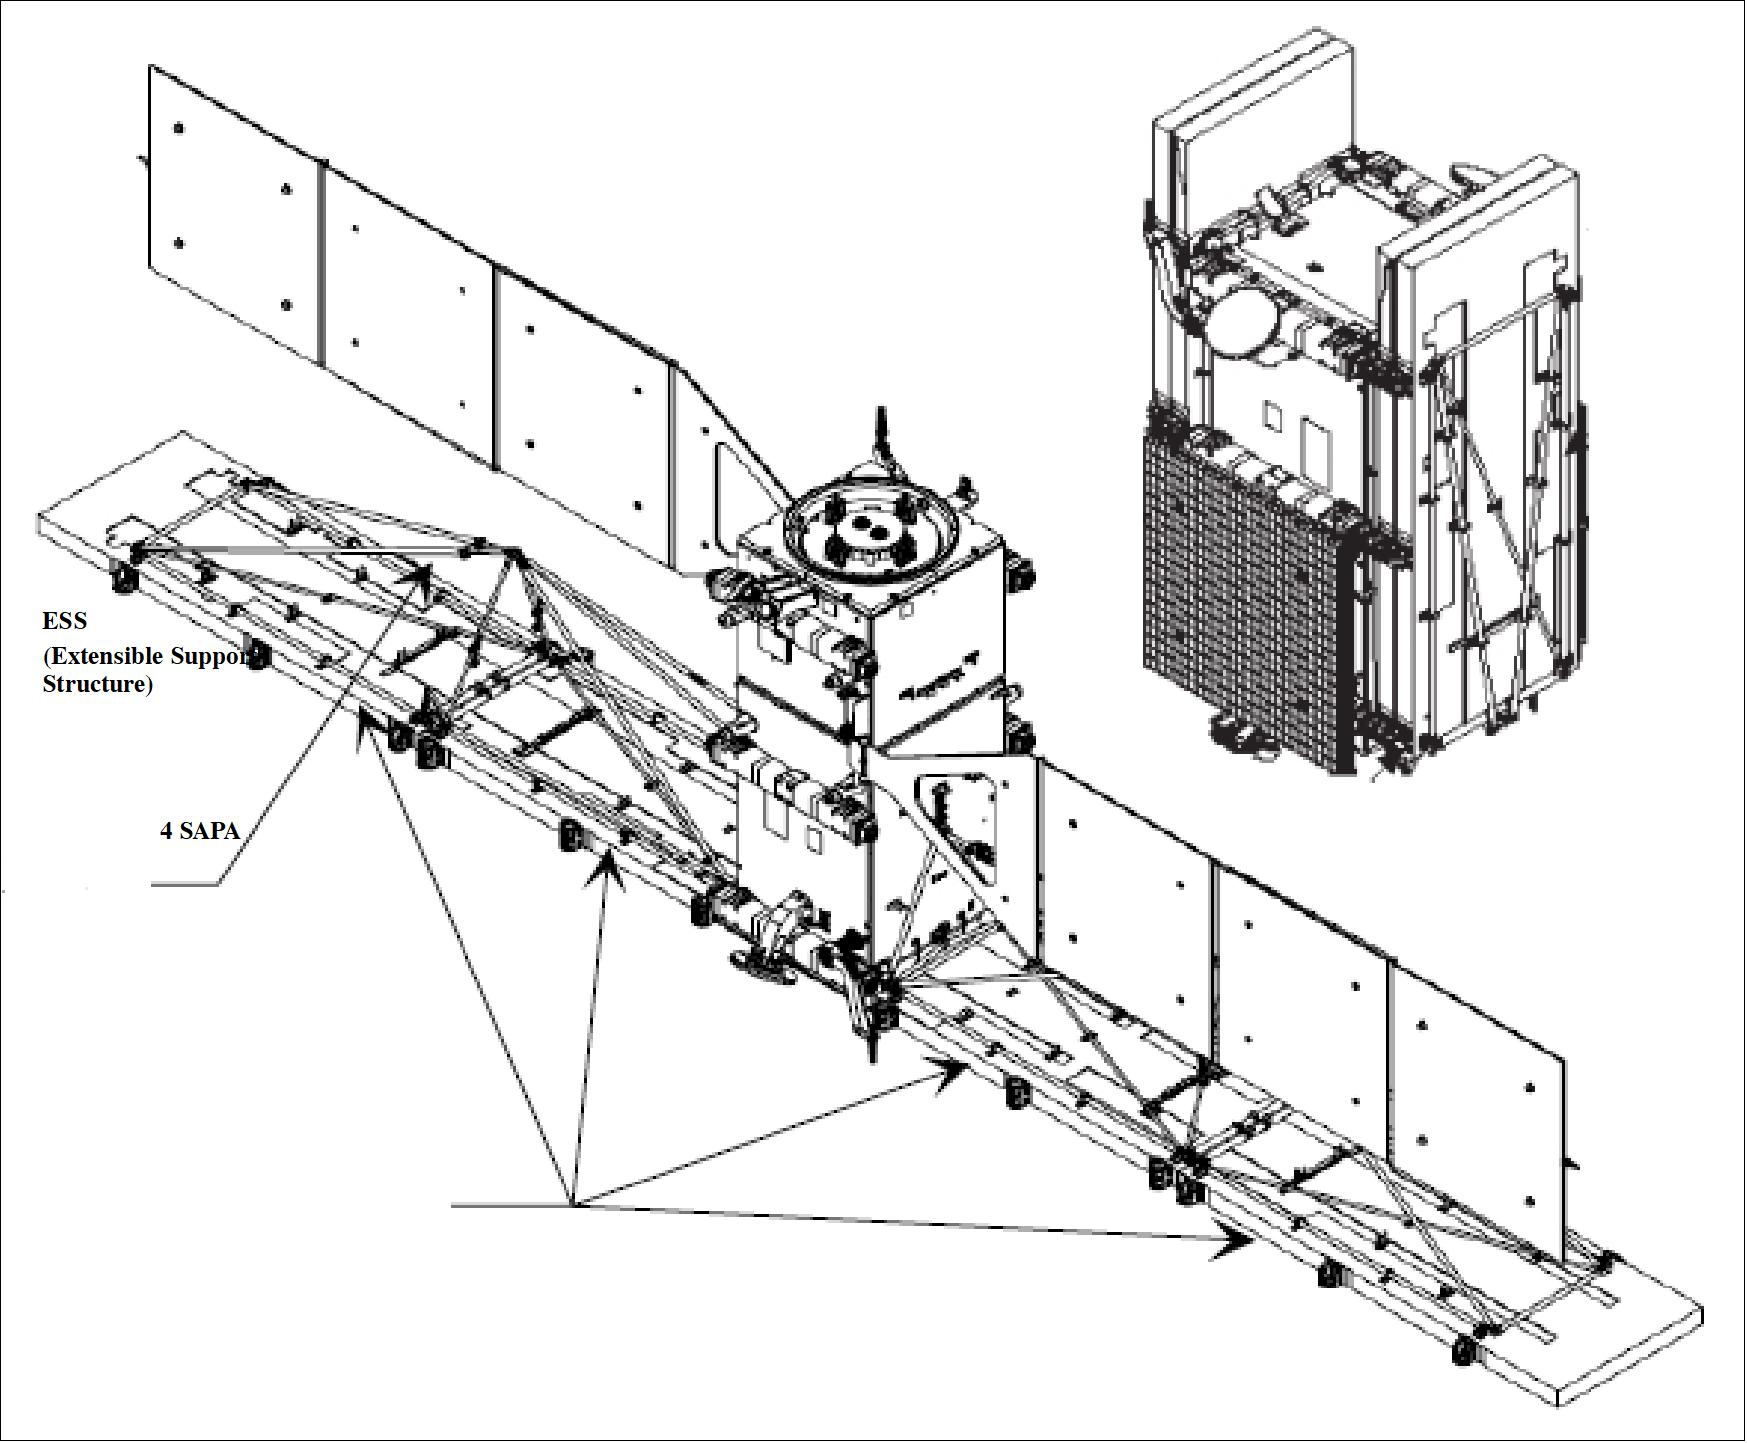 Figure 34: Line drawing of the RADARSAT-2 spacecraft (image credit: MDA)